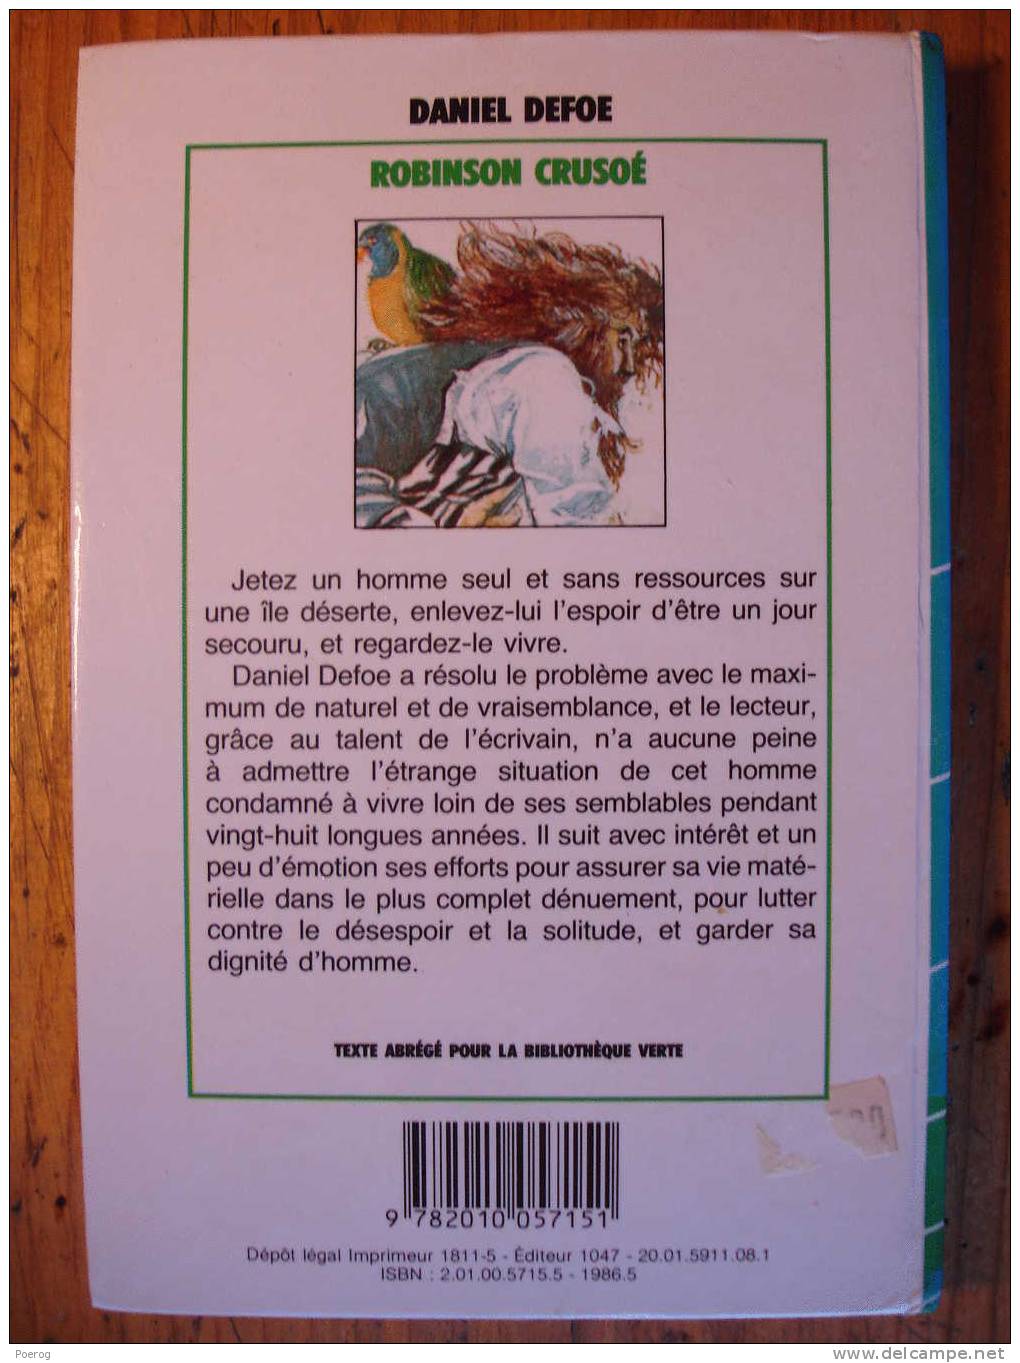 ROBINSON CRUSOE Par DANIEL DEFOE - BIBLIOTHEQUE VERTE - 1986 - Illustrations ANNIE CLAUDE MARTIN - Bibliothèque Verte